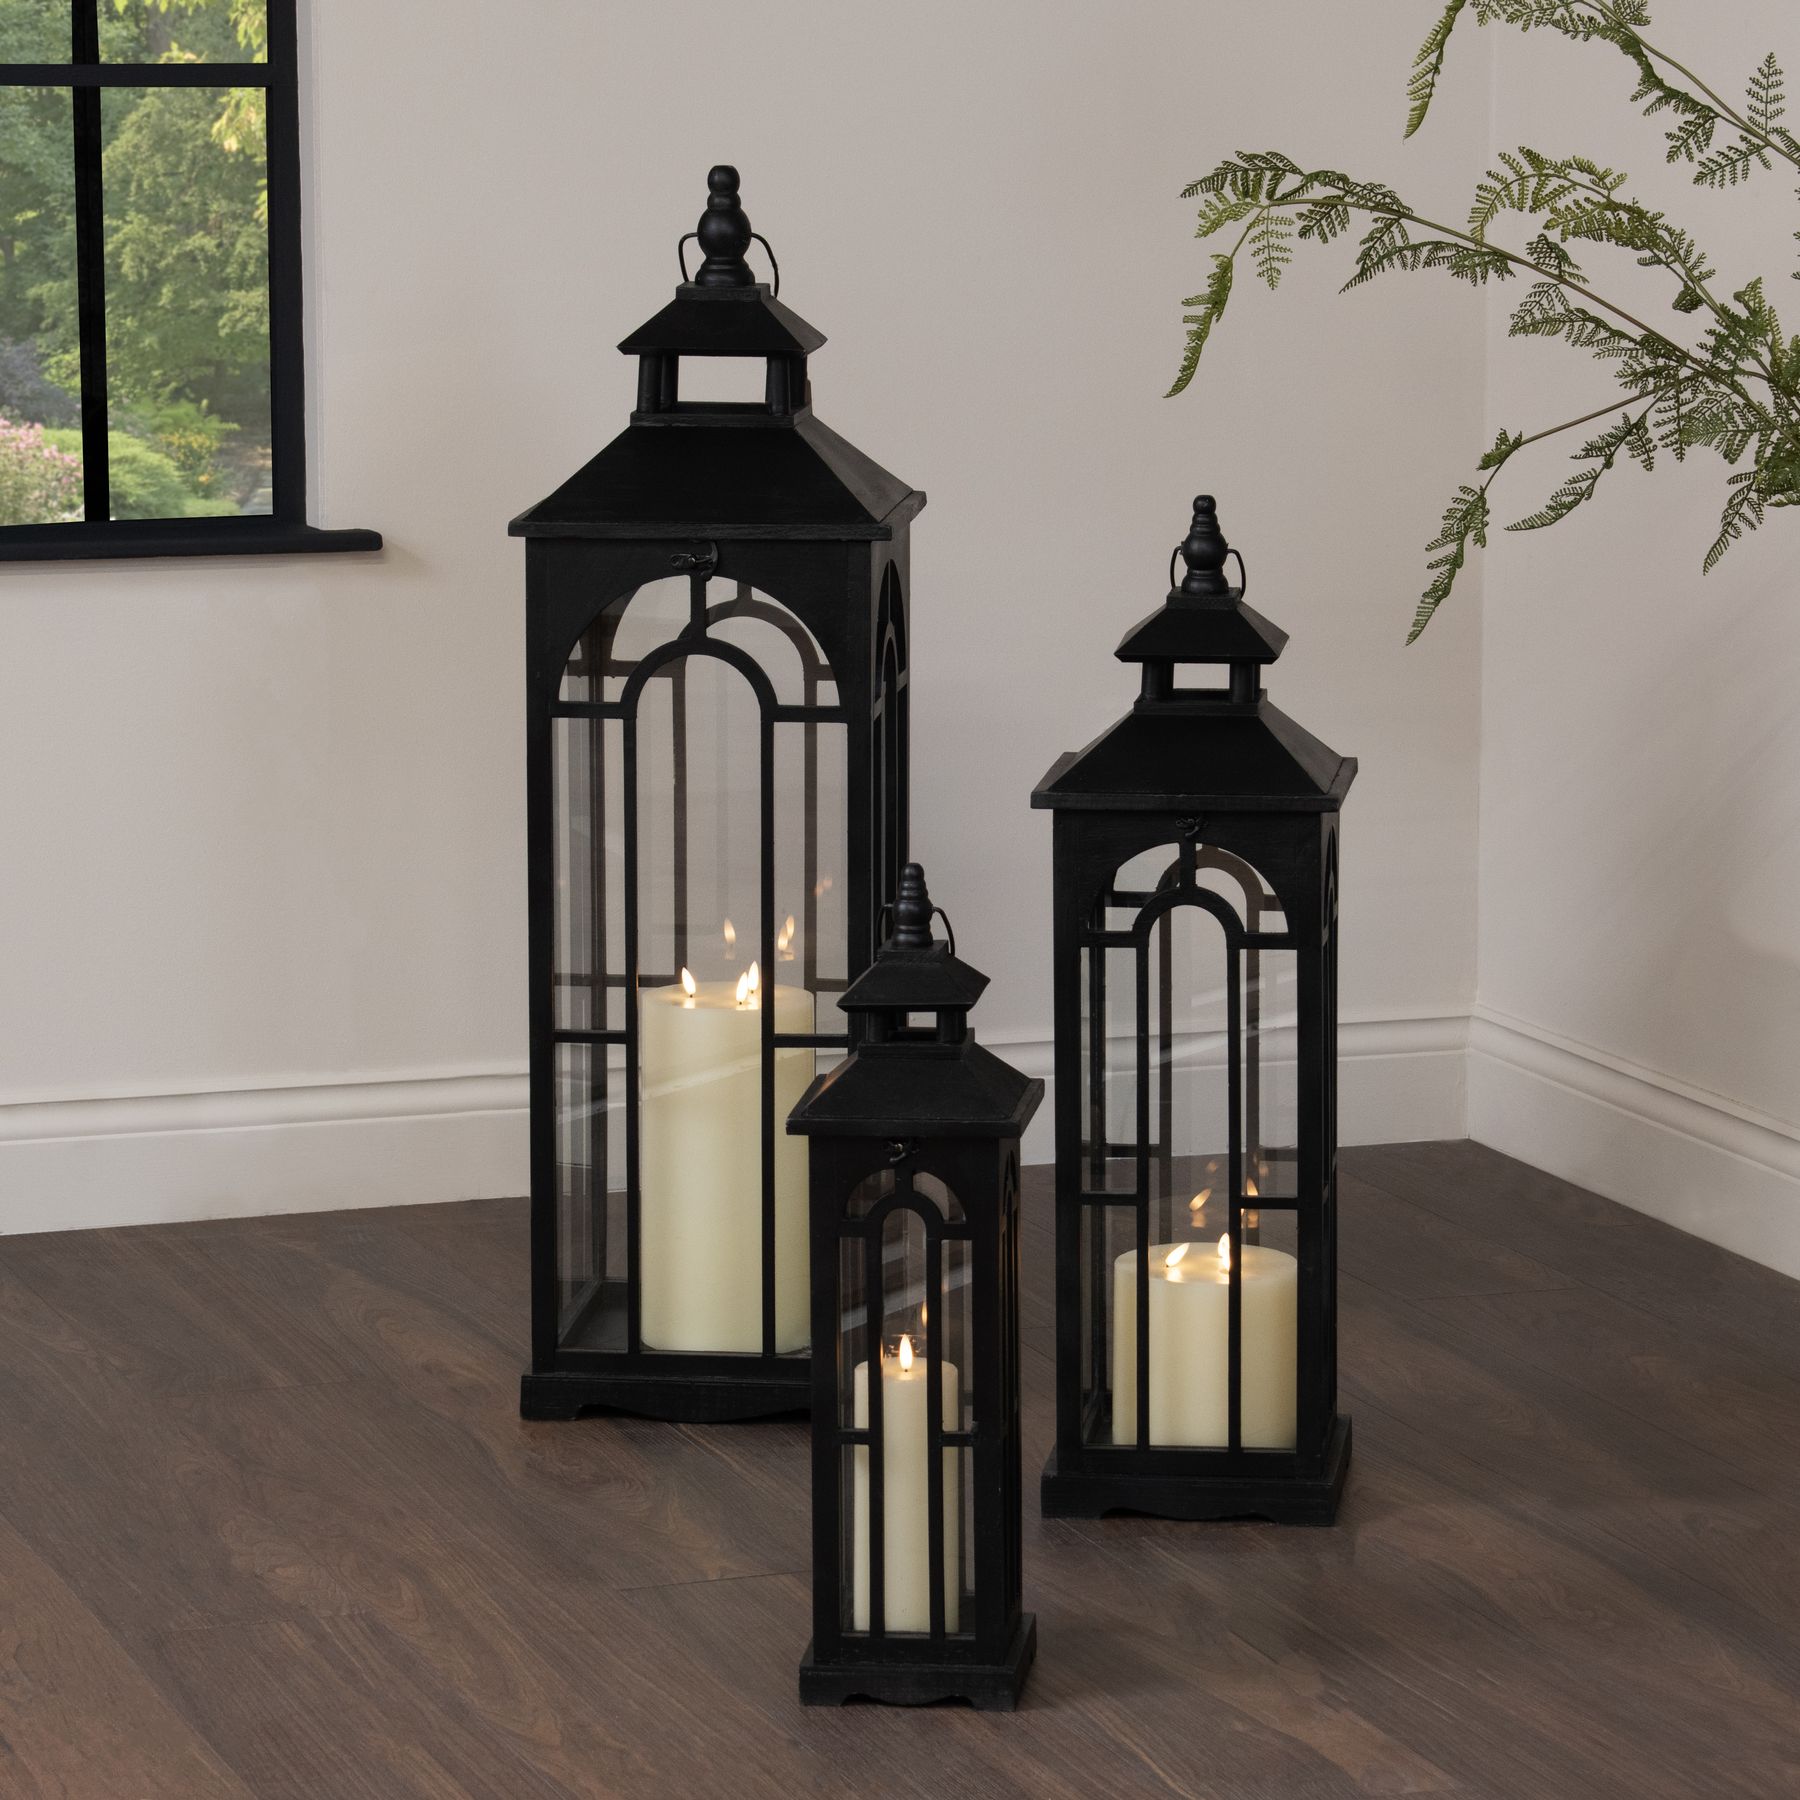 Set Of Three Black Wooden Lanterns With Archway Design - Image 4